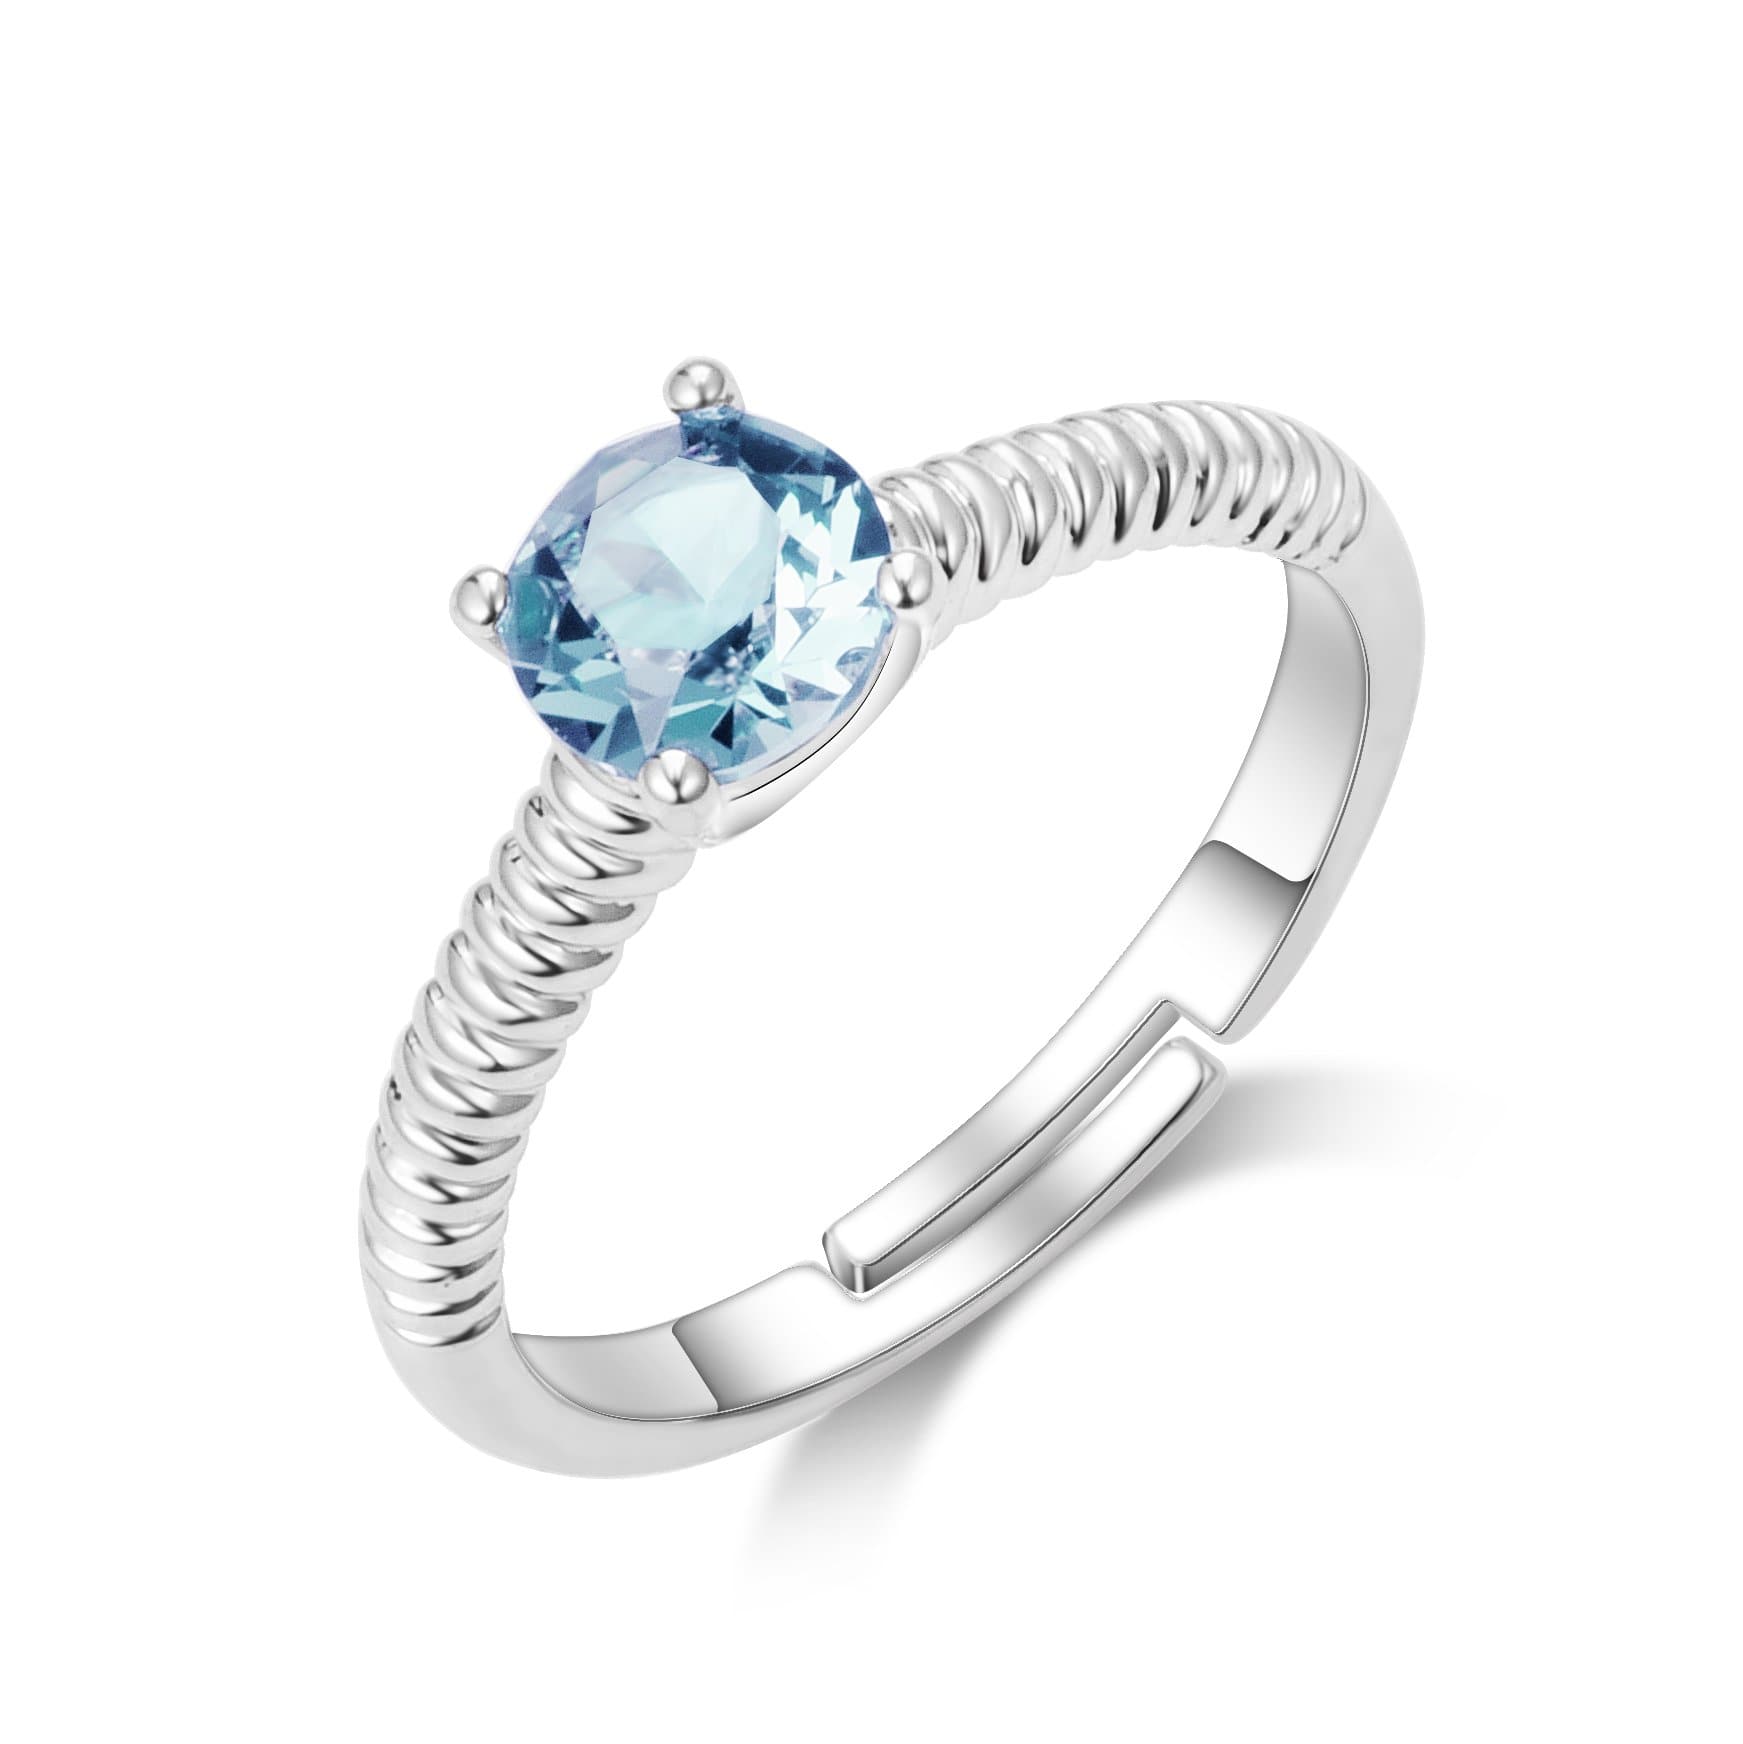 Light Blue Adjustable Crystal Ring Created with Zircondia® Crystals by Philip Jones Jewellery